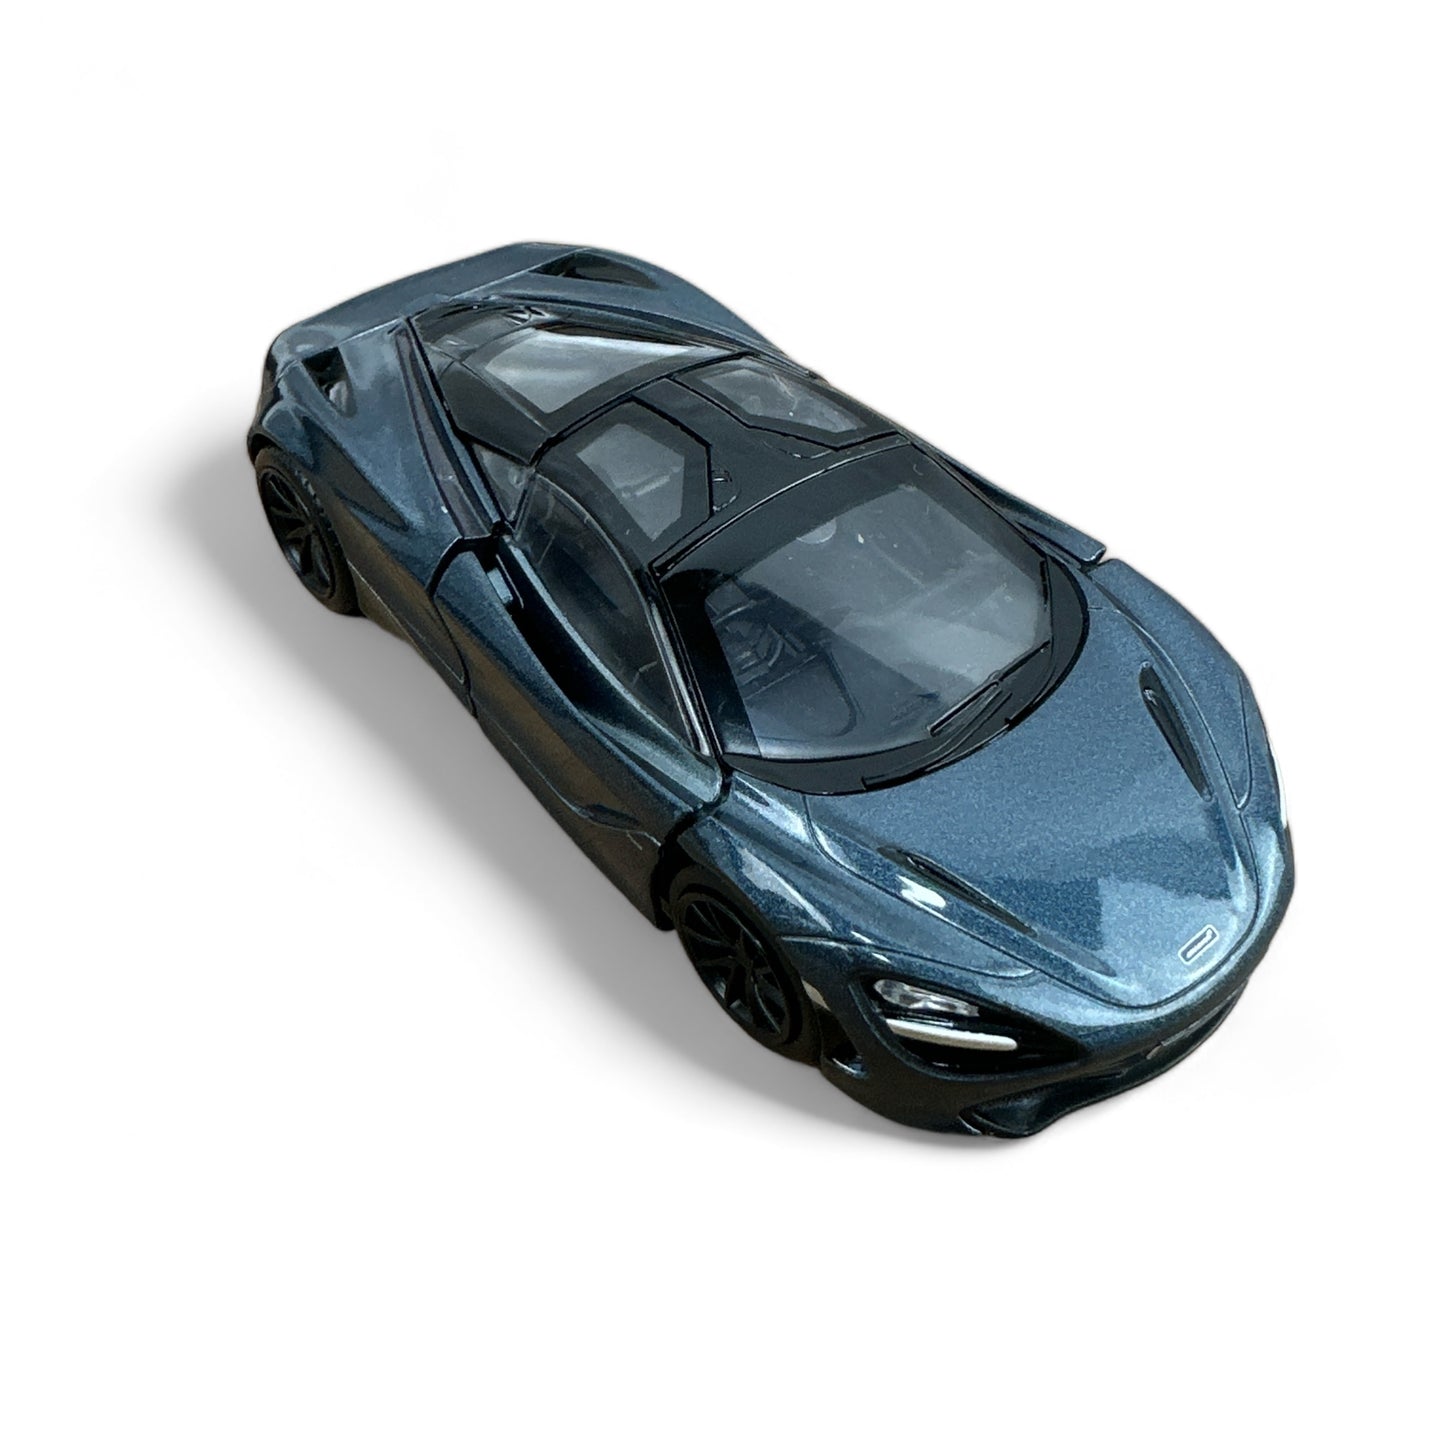 Fast & Furious McLaren 720S Die-cast Car